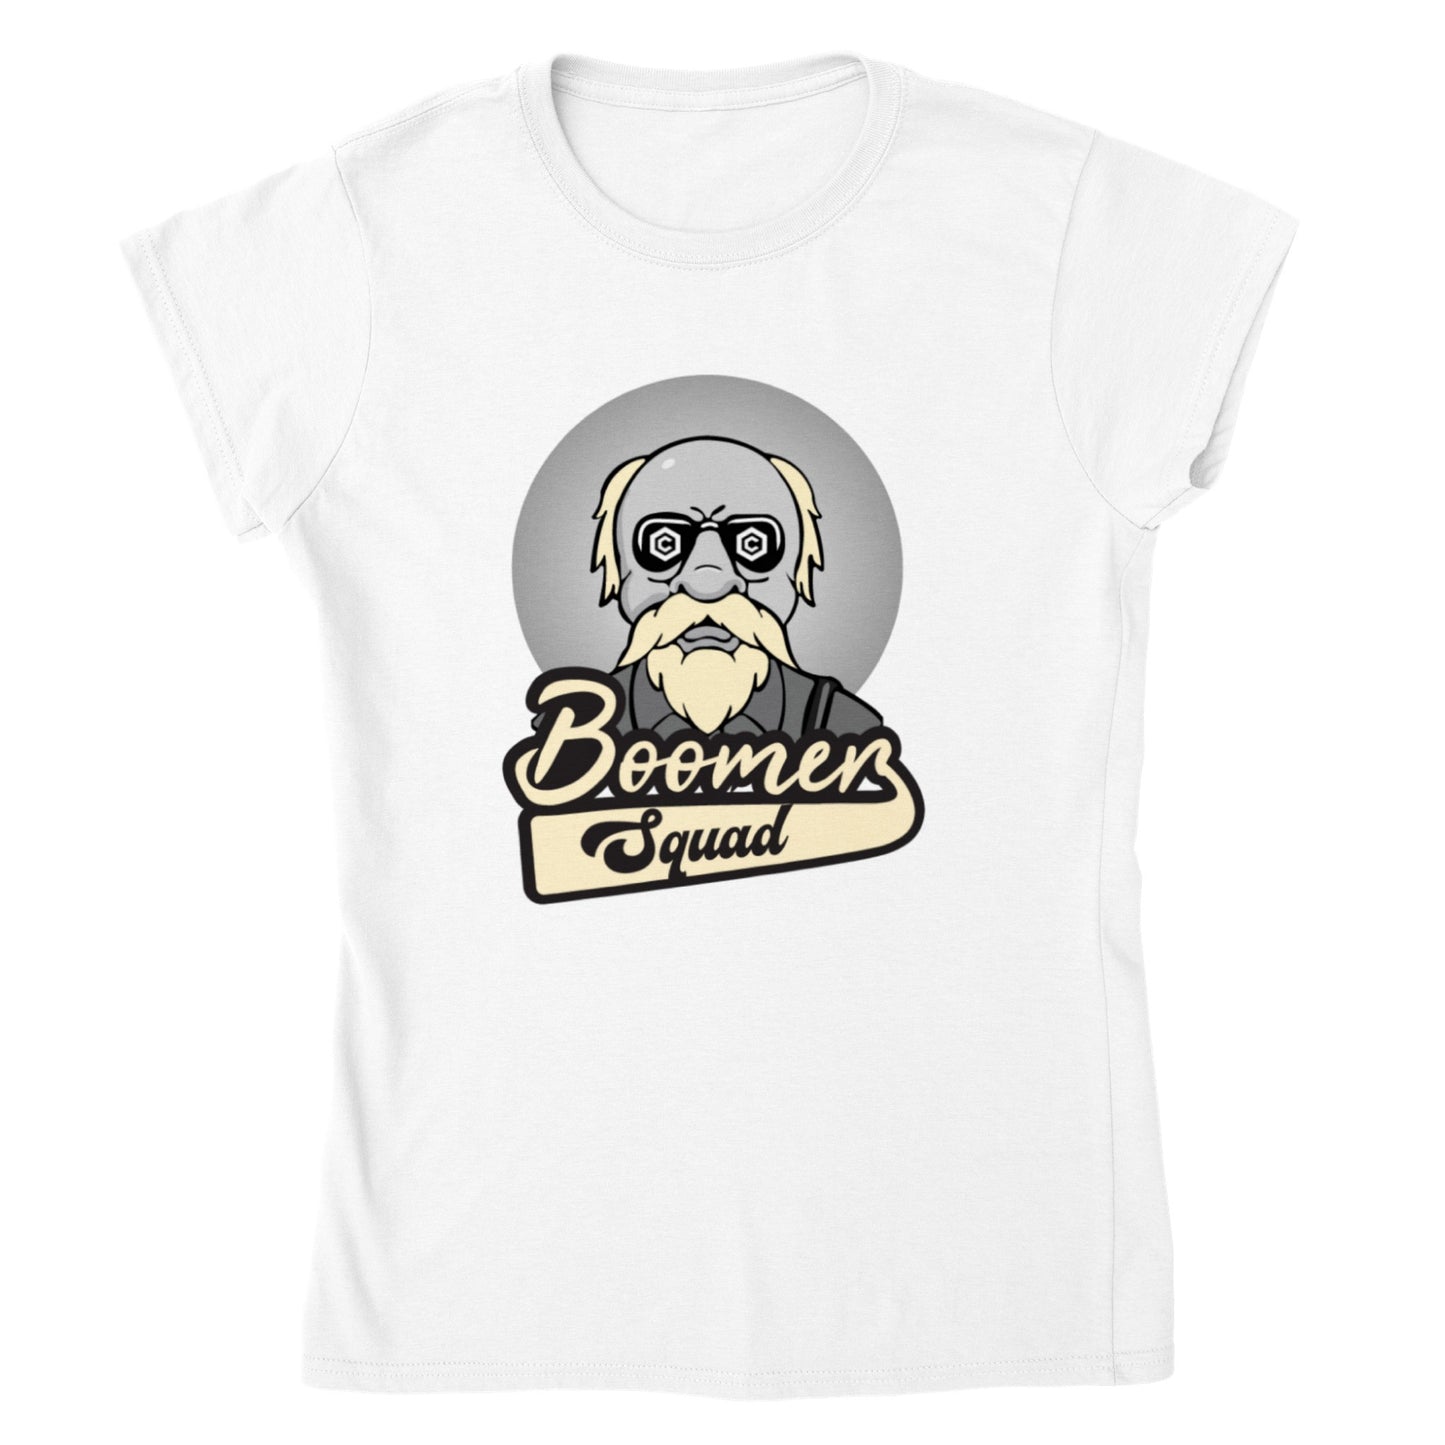 Boomer Squad Classic Womens Crewneck T-shirt